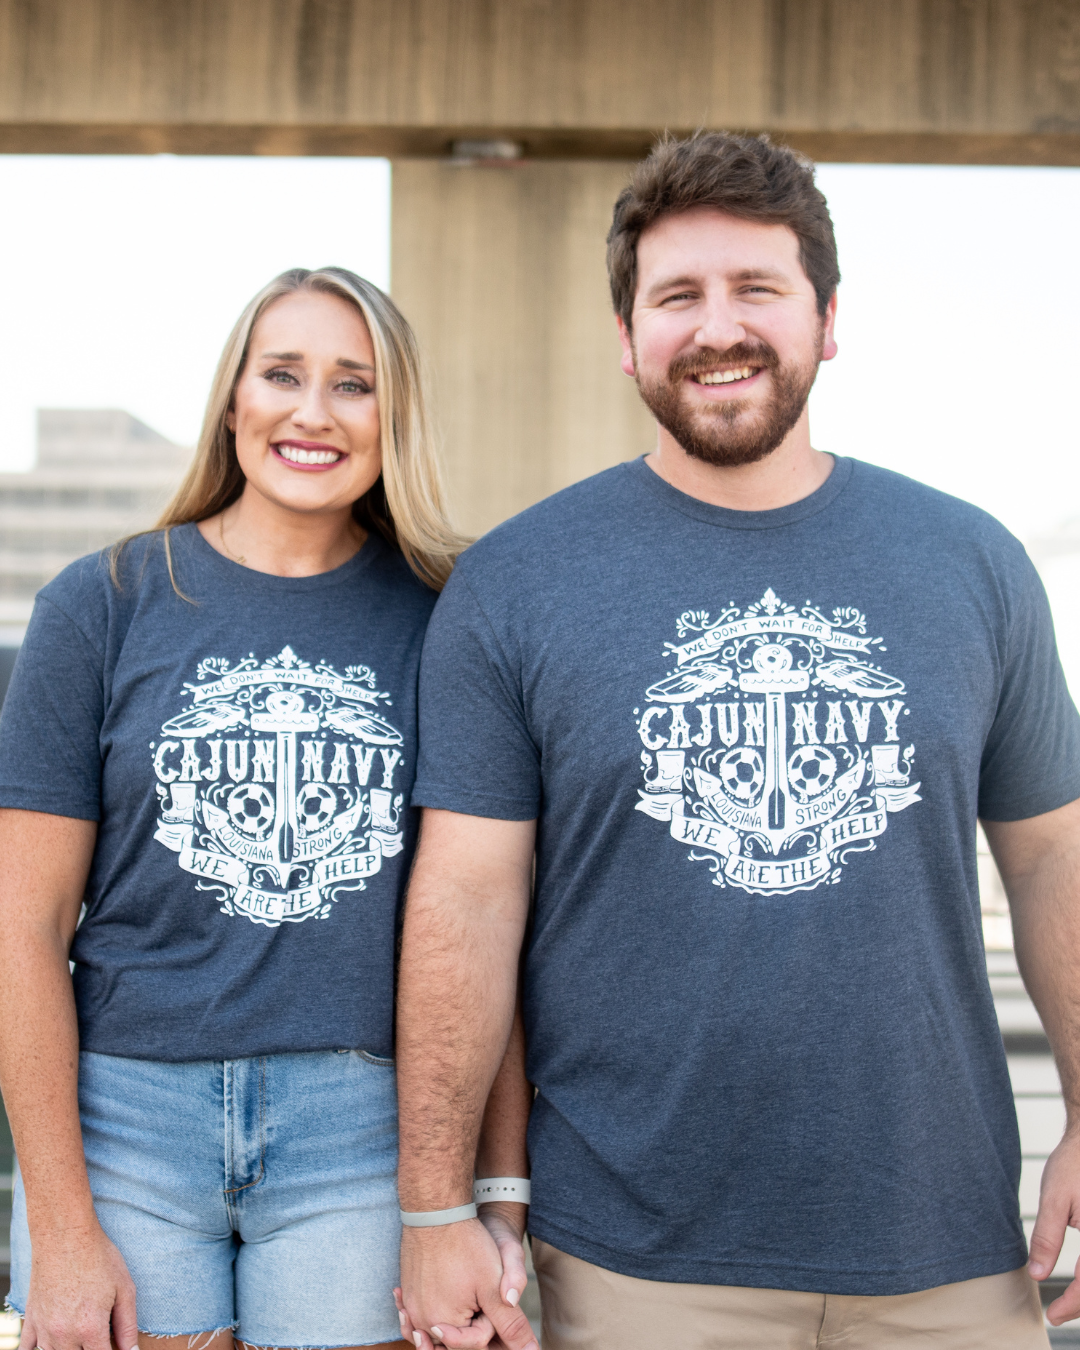 Buy Louisiana T-shirts - Baton Rouge, LA – Sweet Baton Rouge